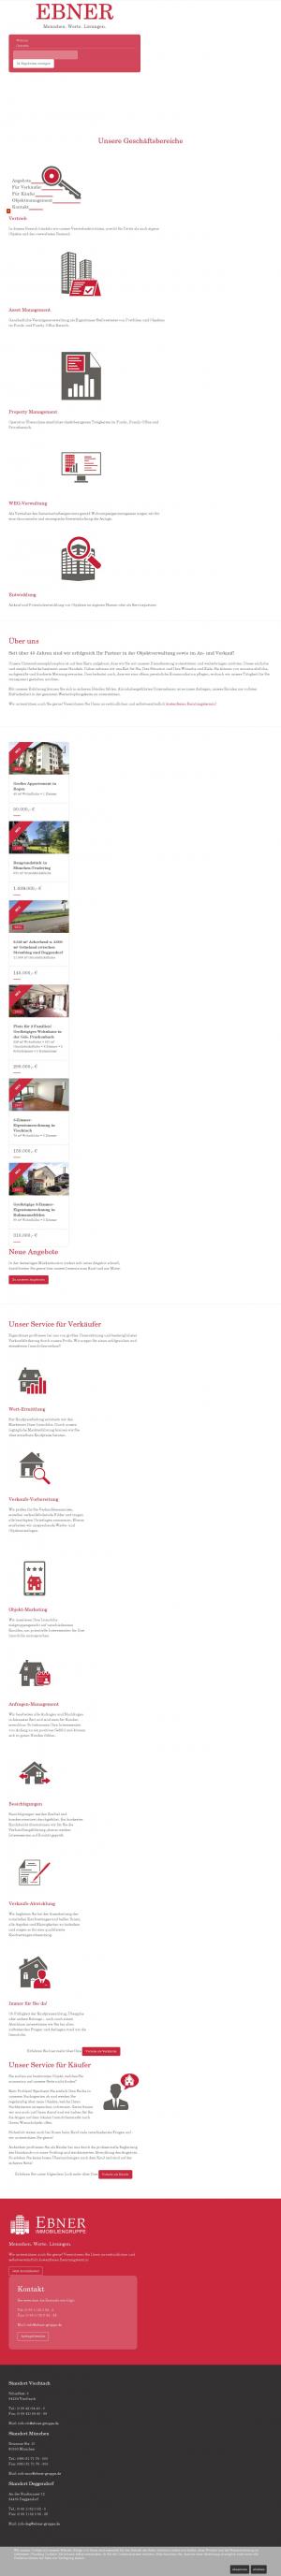 www.ebner-immobilien.de